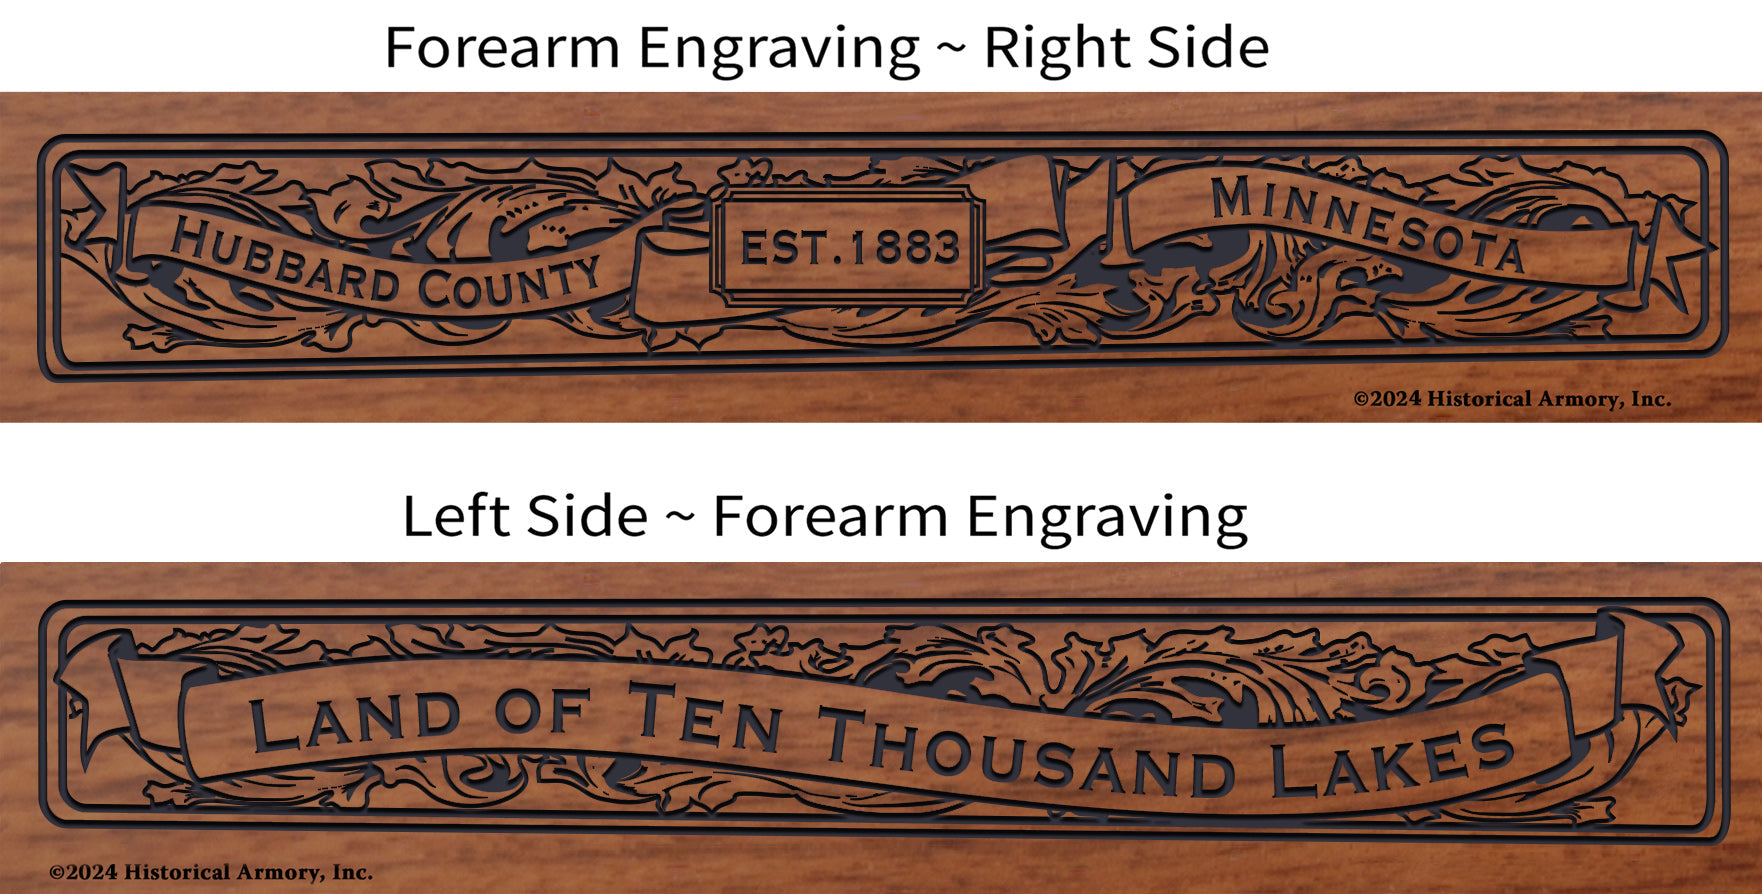 Hubbard County Minnesota Engraved Rifle Forearm